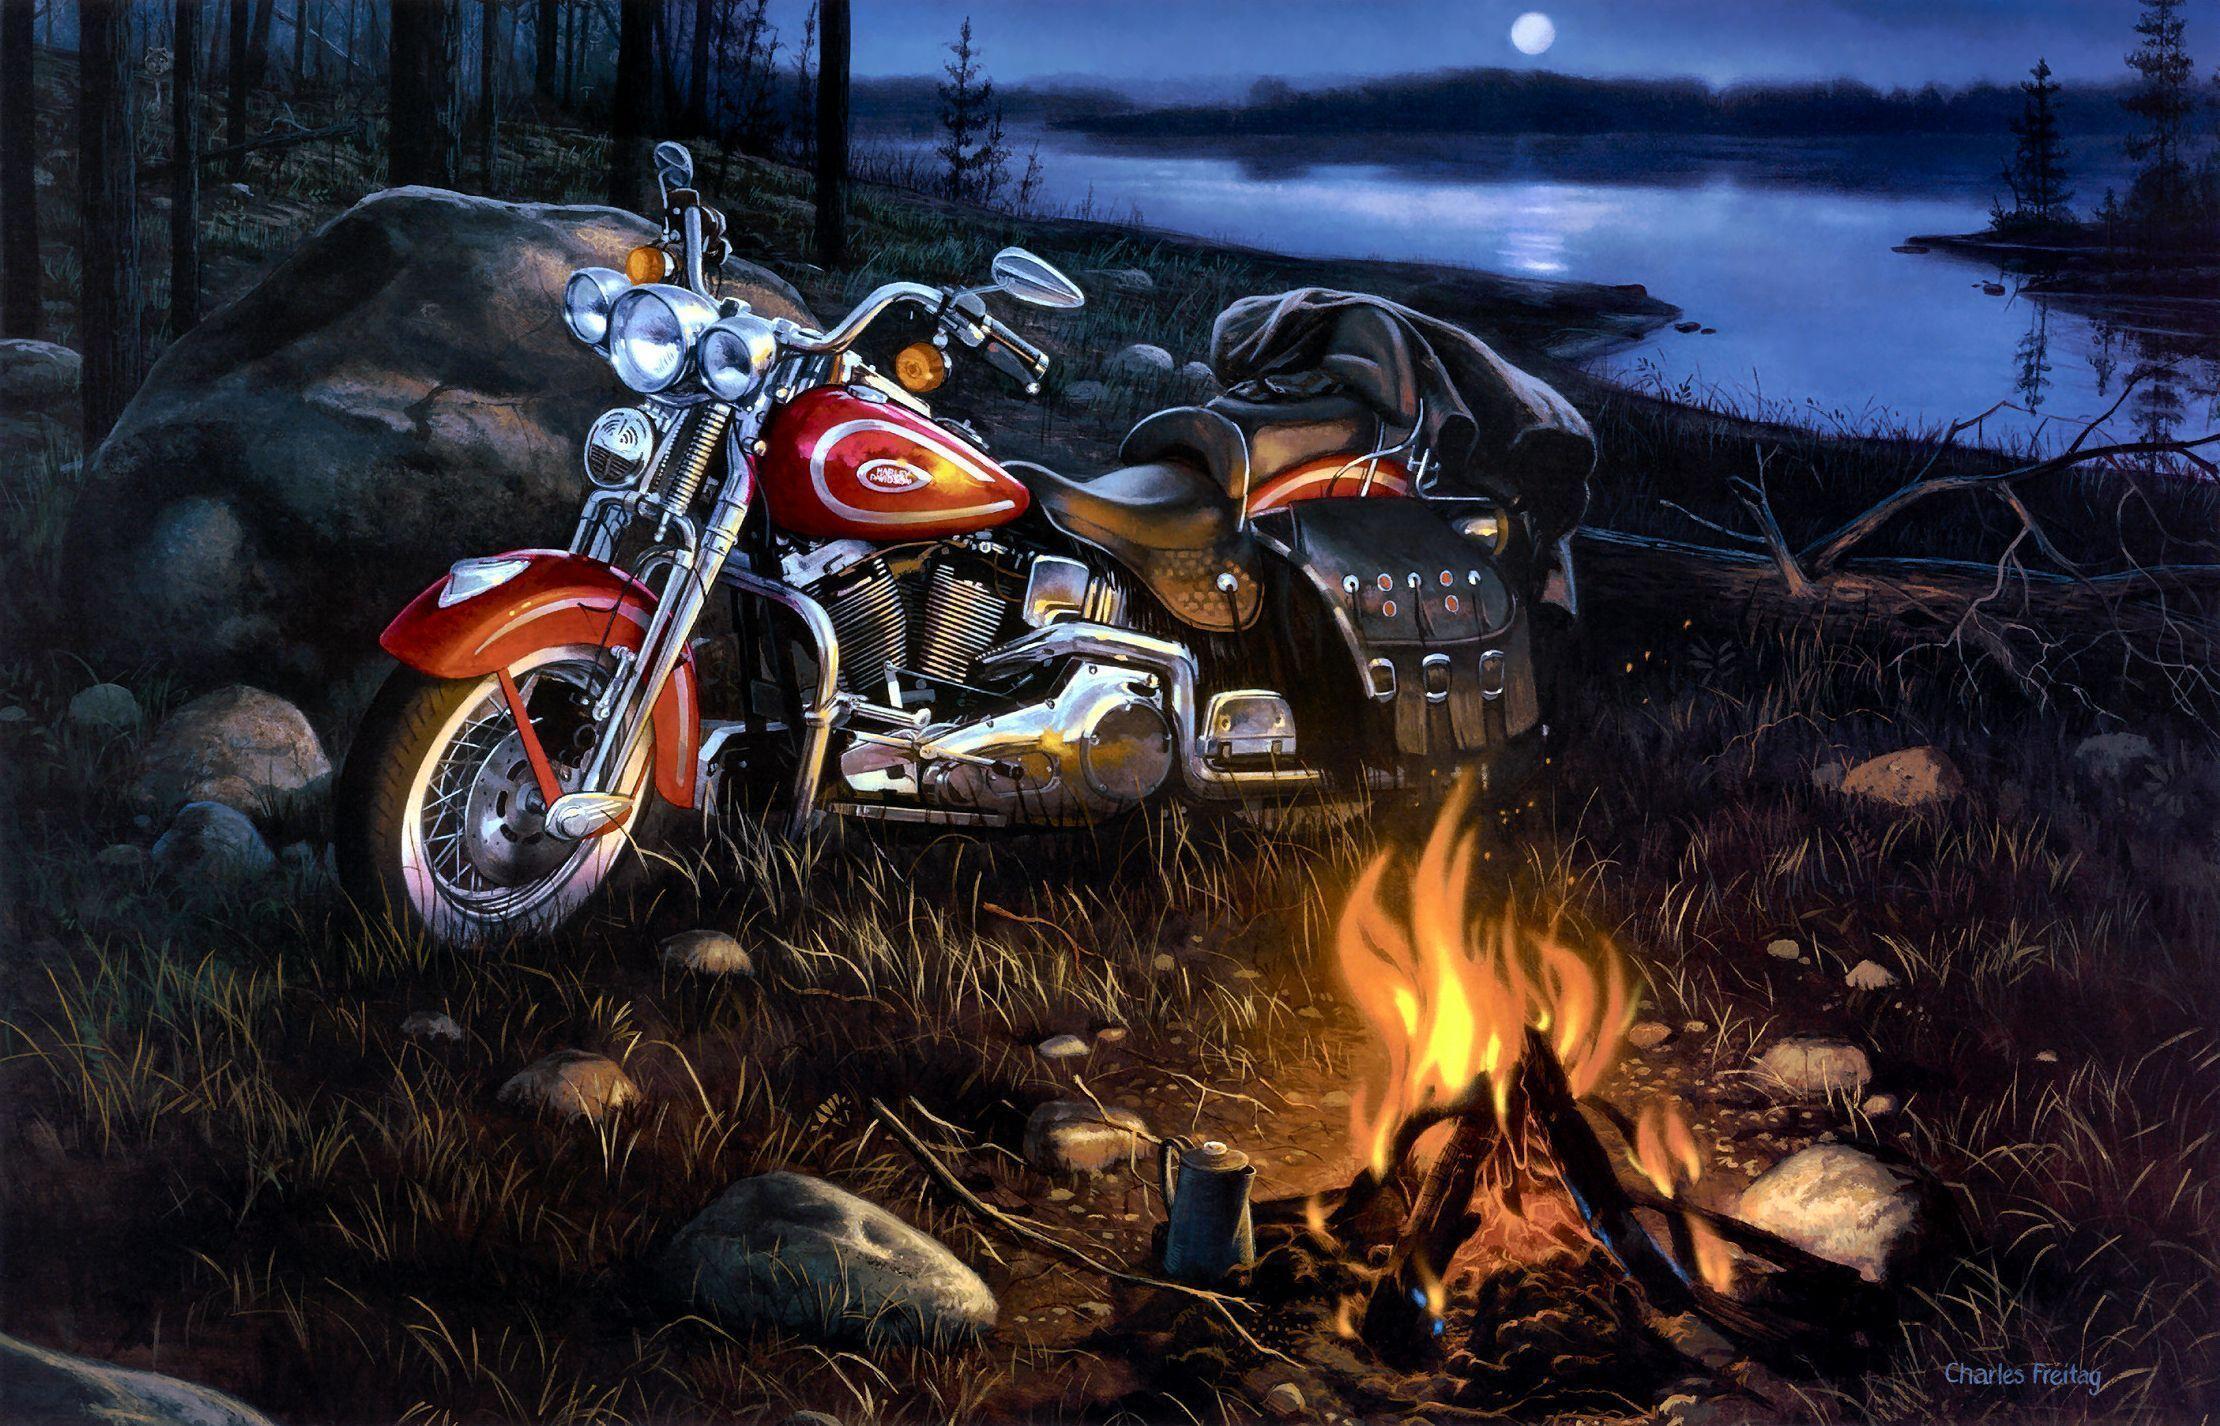 77+] Free Harley Davidson Wallpaper - WallpaperSafari